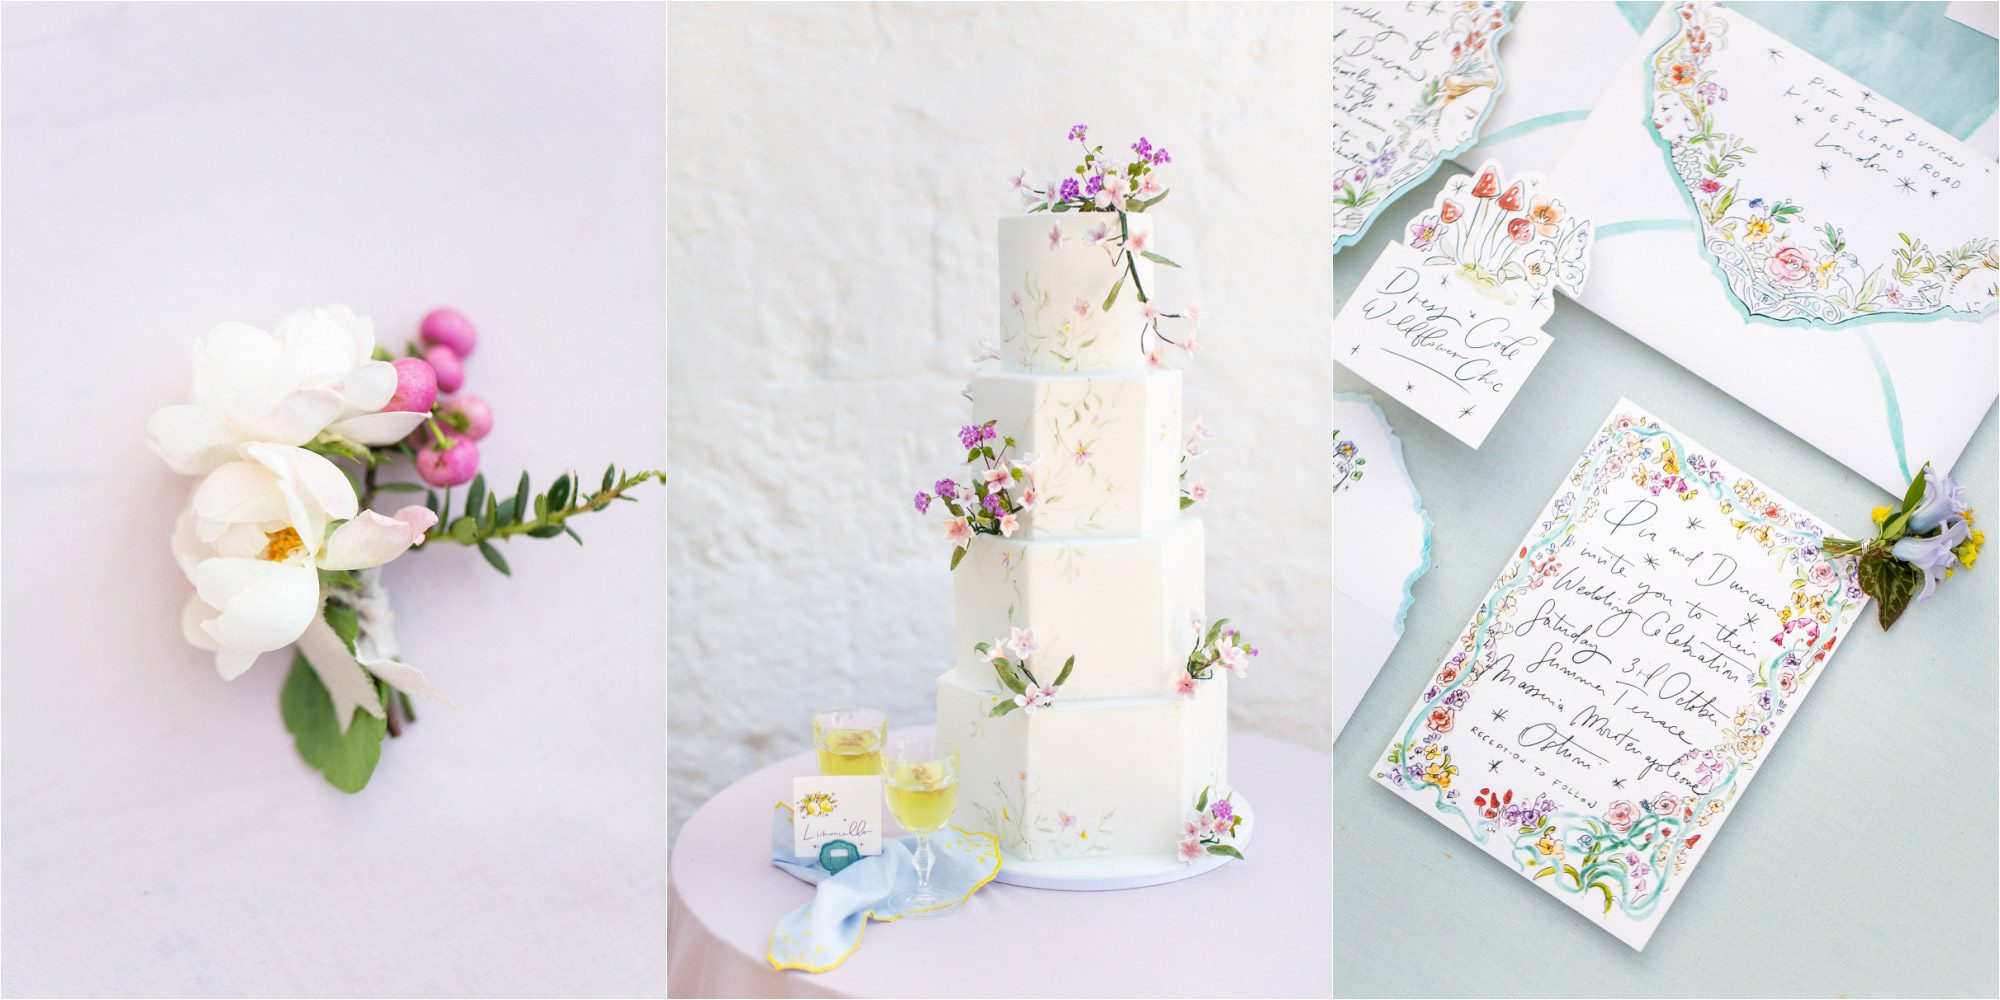 Micro-wedding styling ideas for a wedding in Puglia